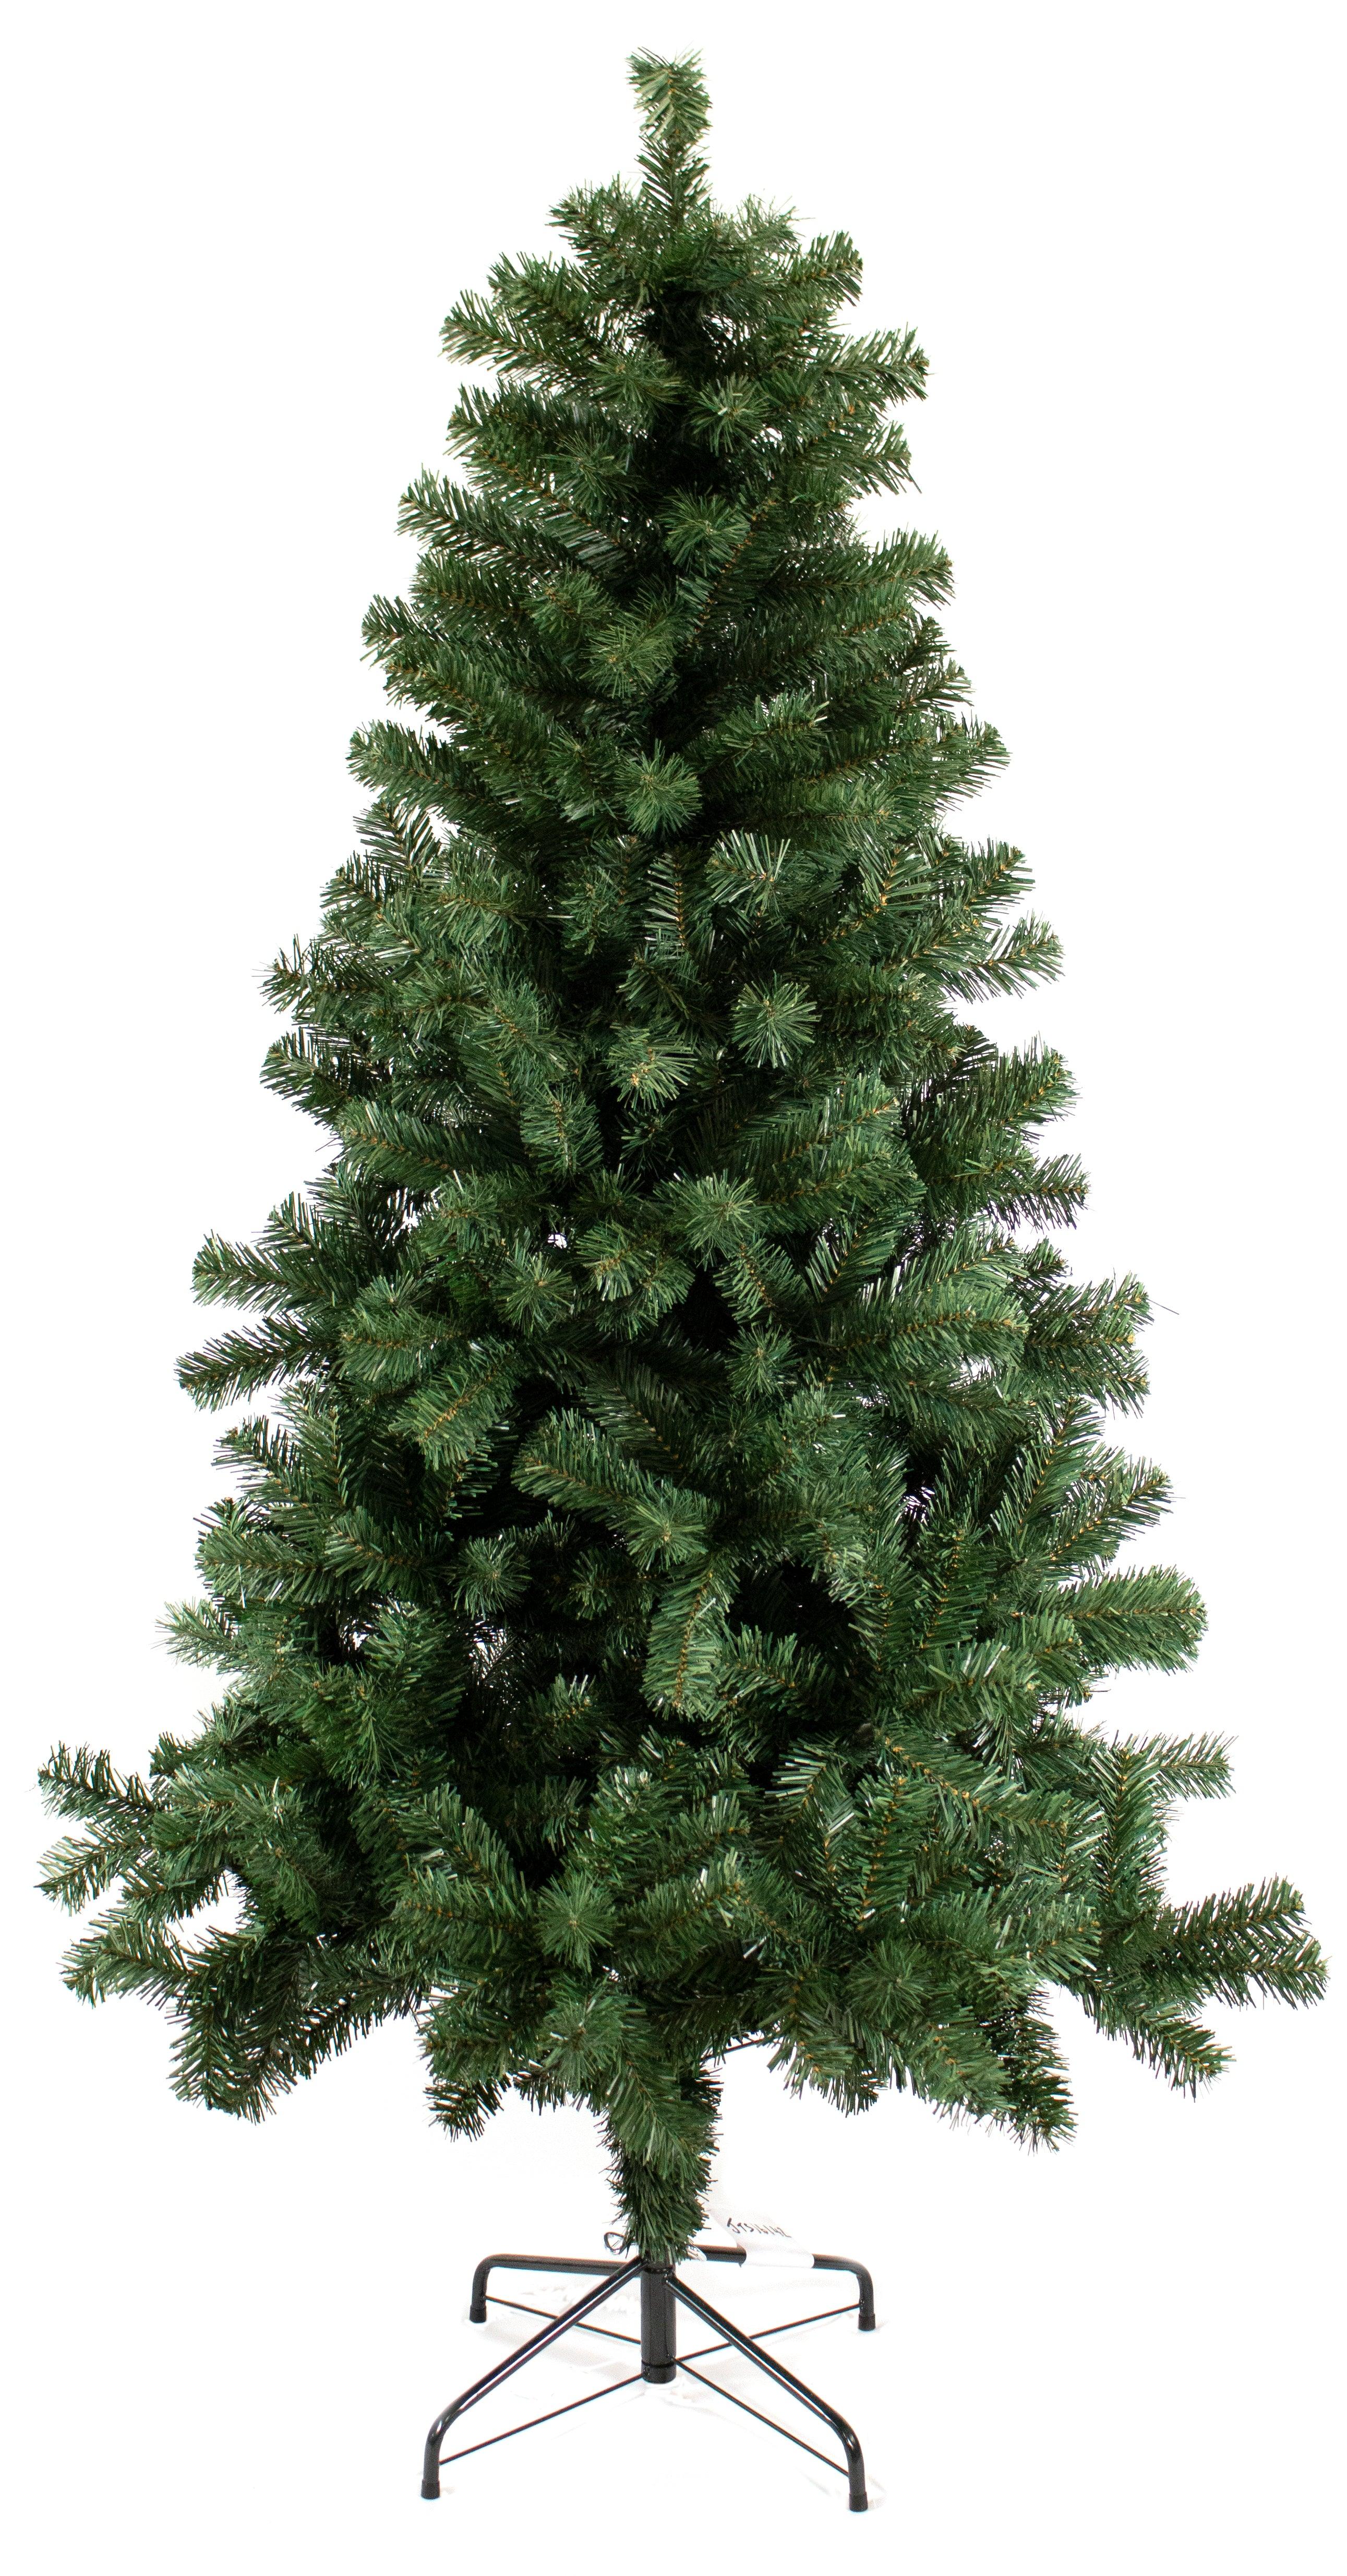 Juniper Green Artificial Christmas Tree 6ft / 180cm - General Hardware Supplies Homevalue